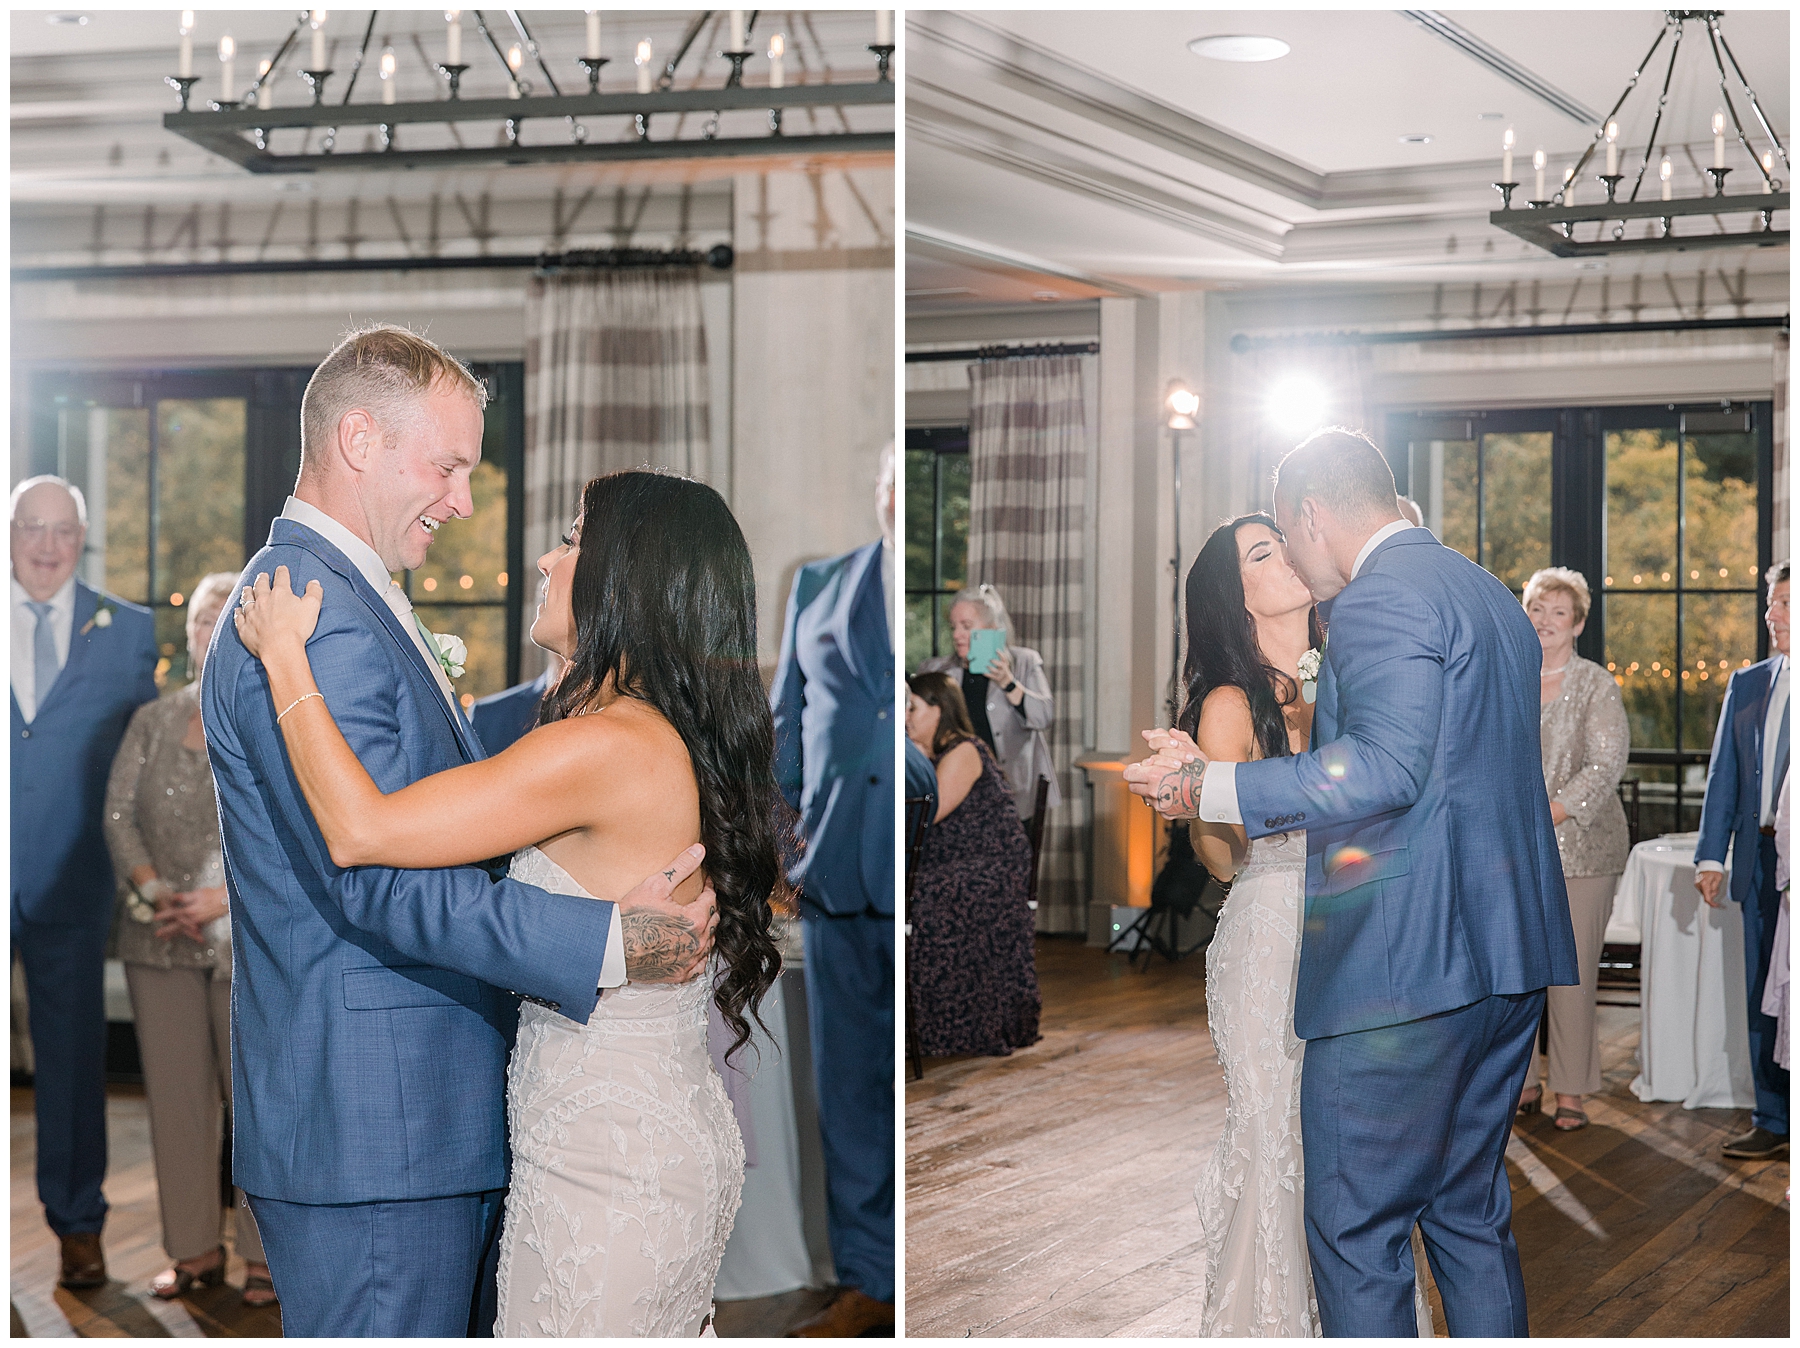 newlyweds share first dance at VT wedding reception